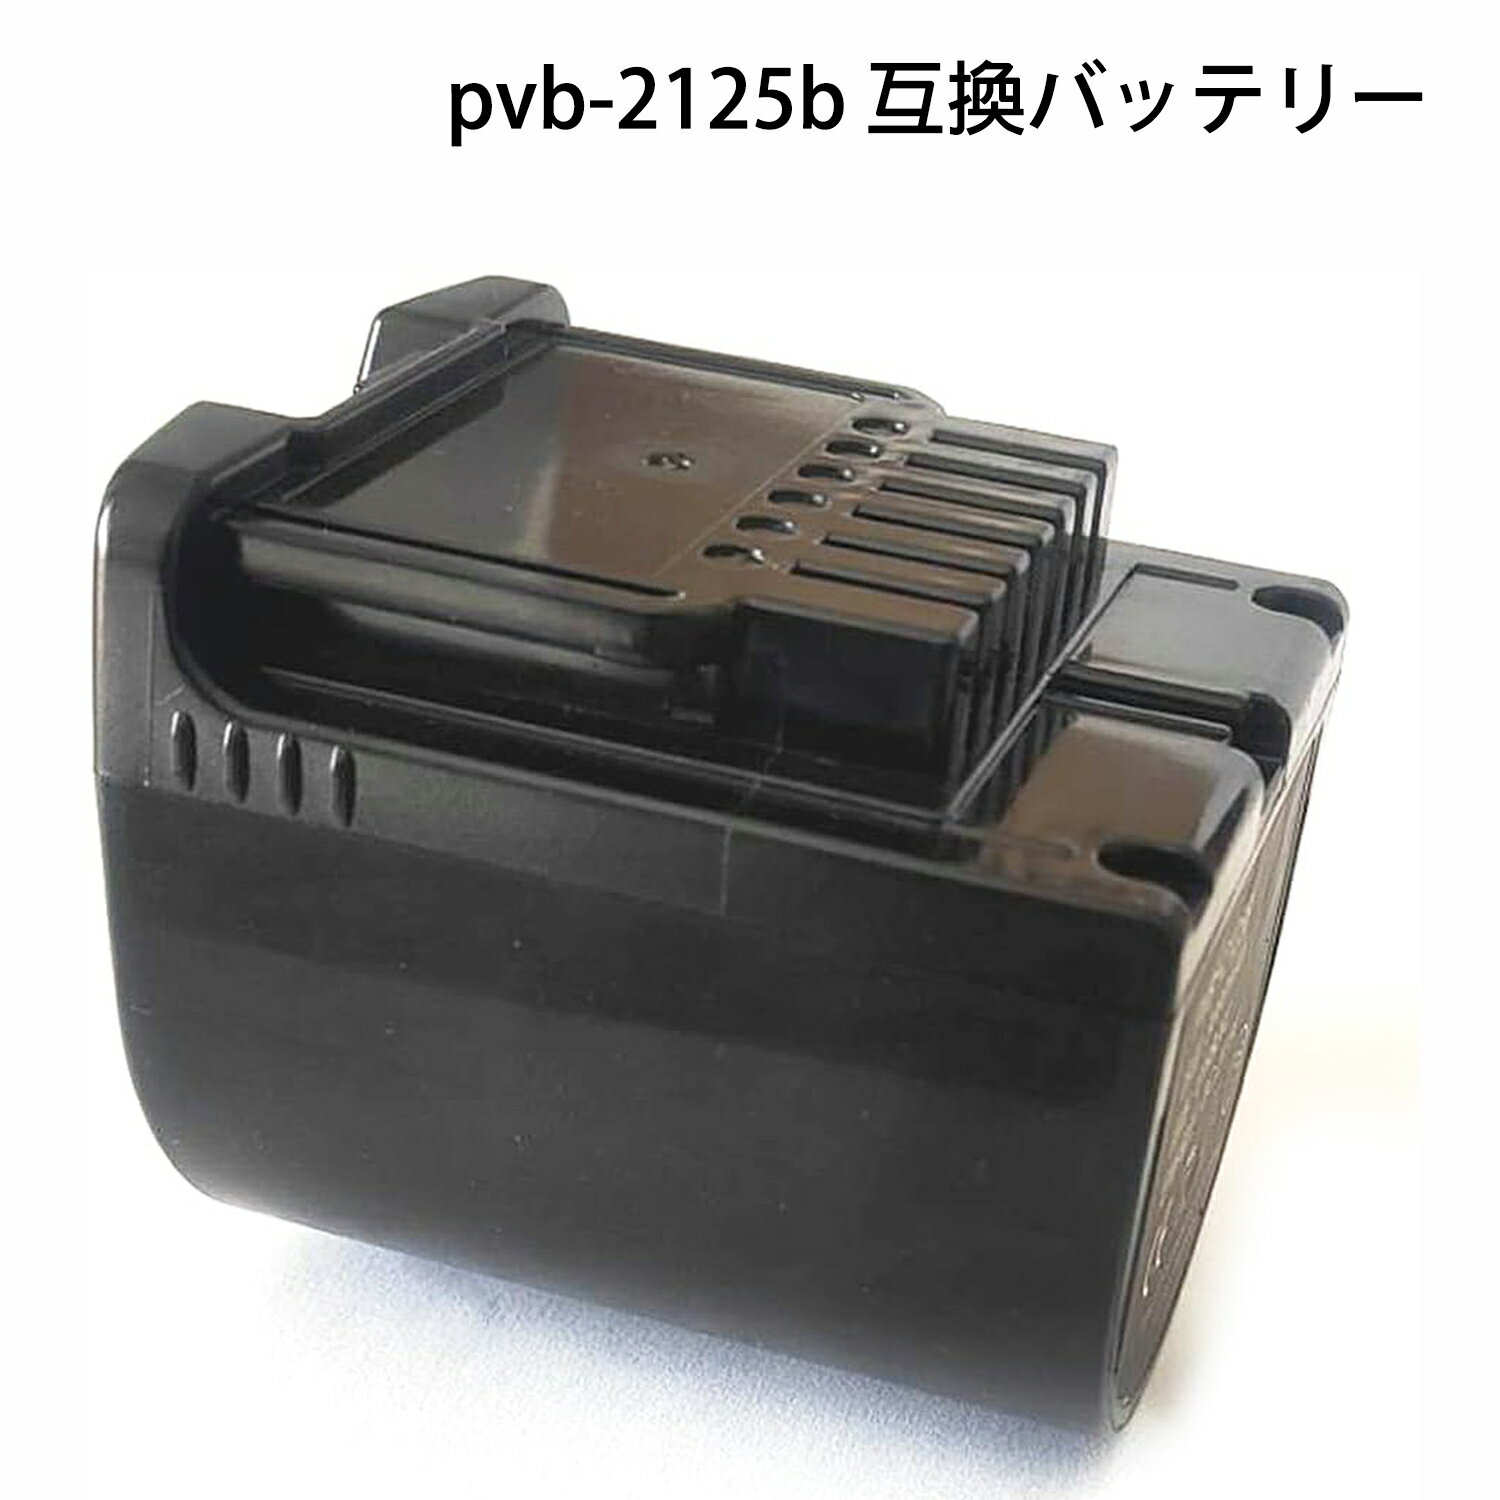 PVB-2125b pv-beh900-009 コードレス掃除機バッテリー pv-bfh900 pv-beh800 pv-bh900g PV-BL50J PV-BL50K 非純正 互換品